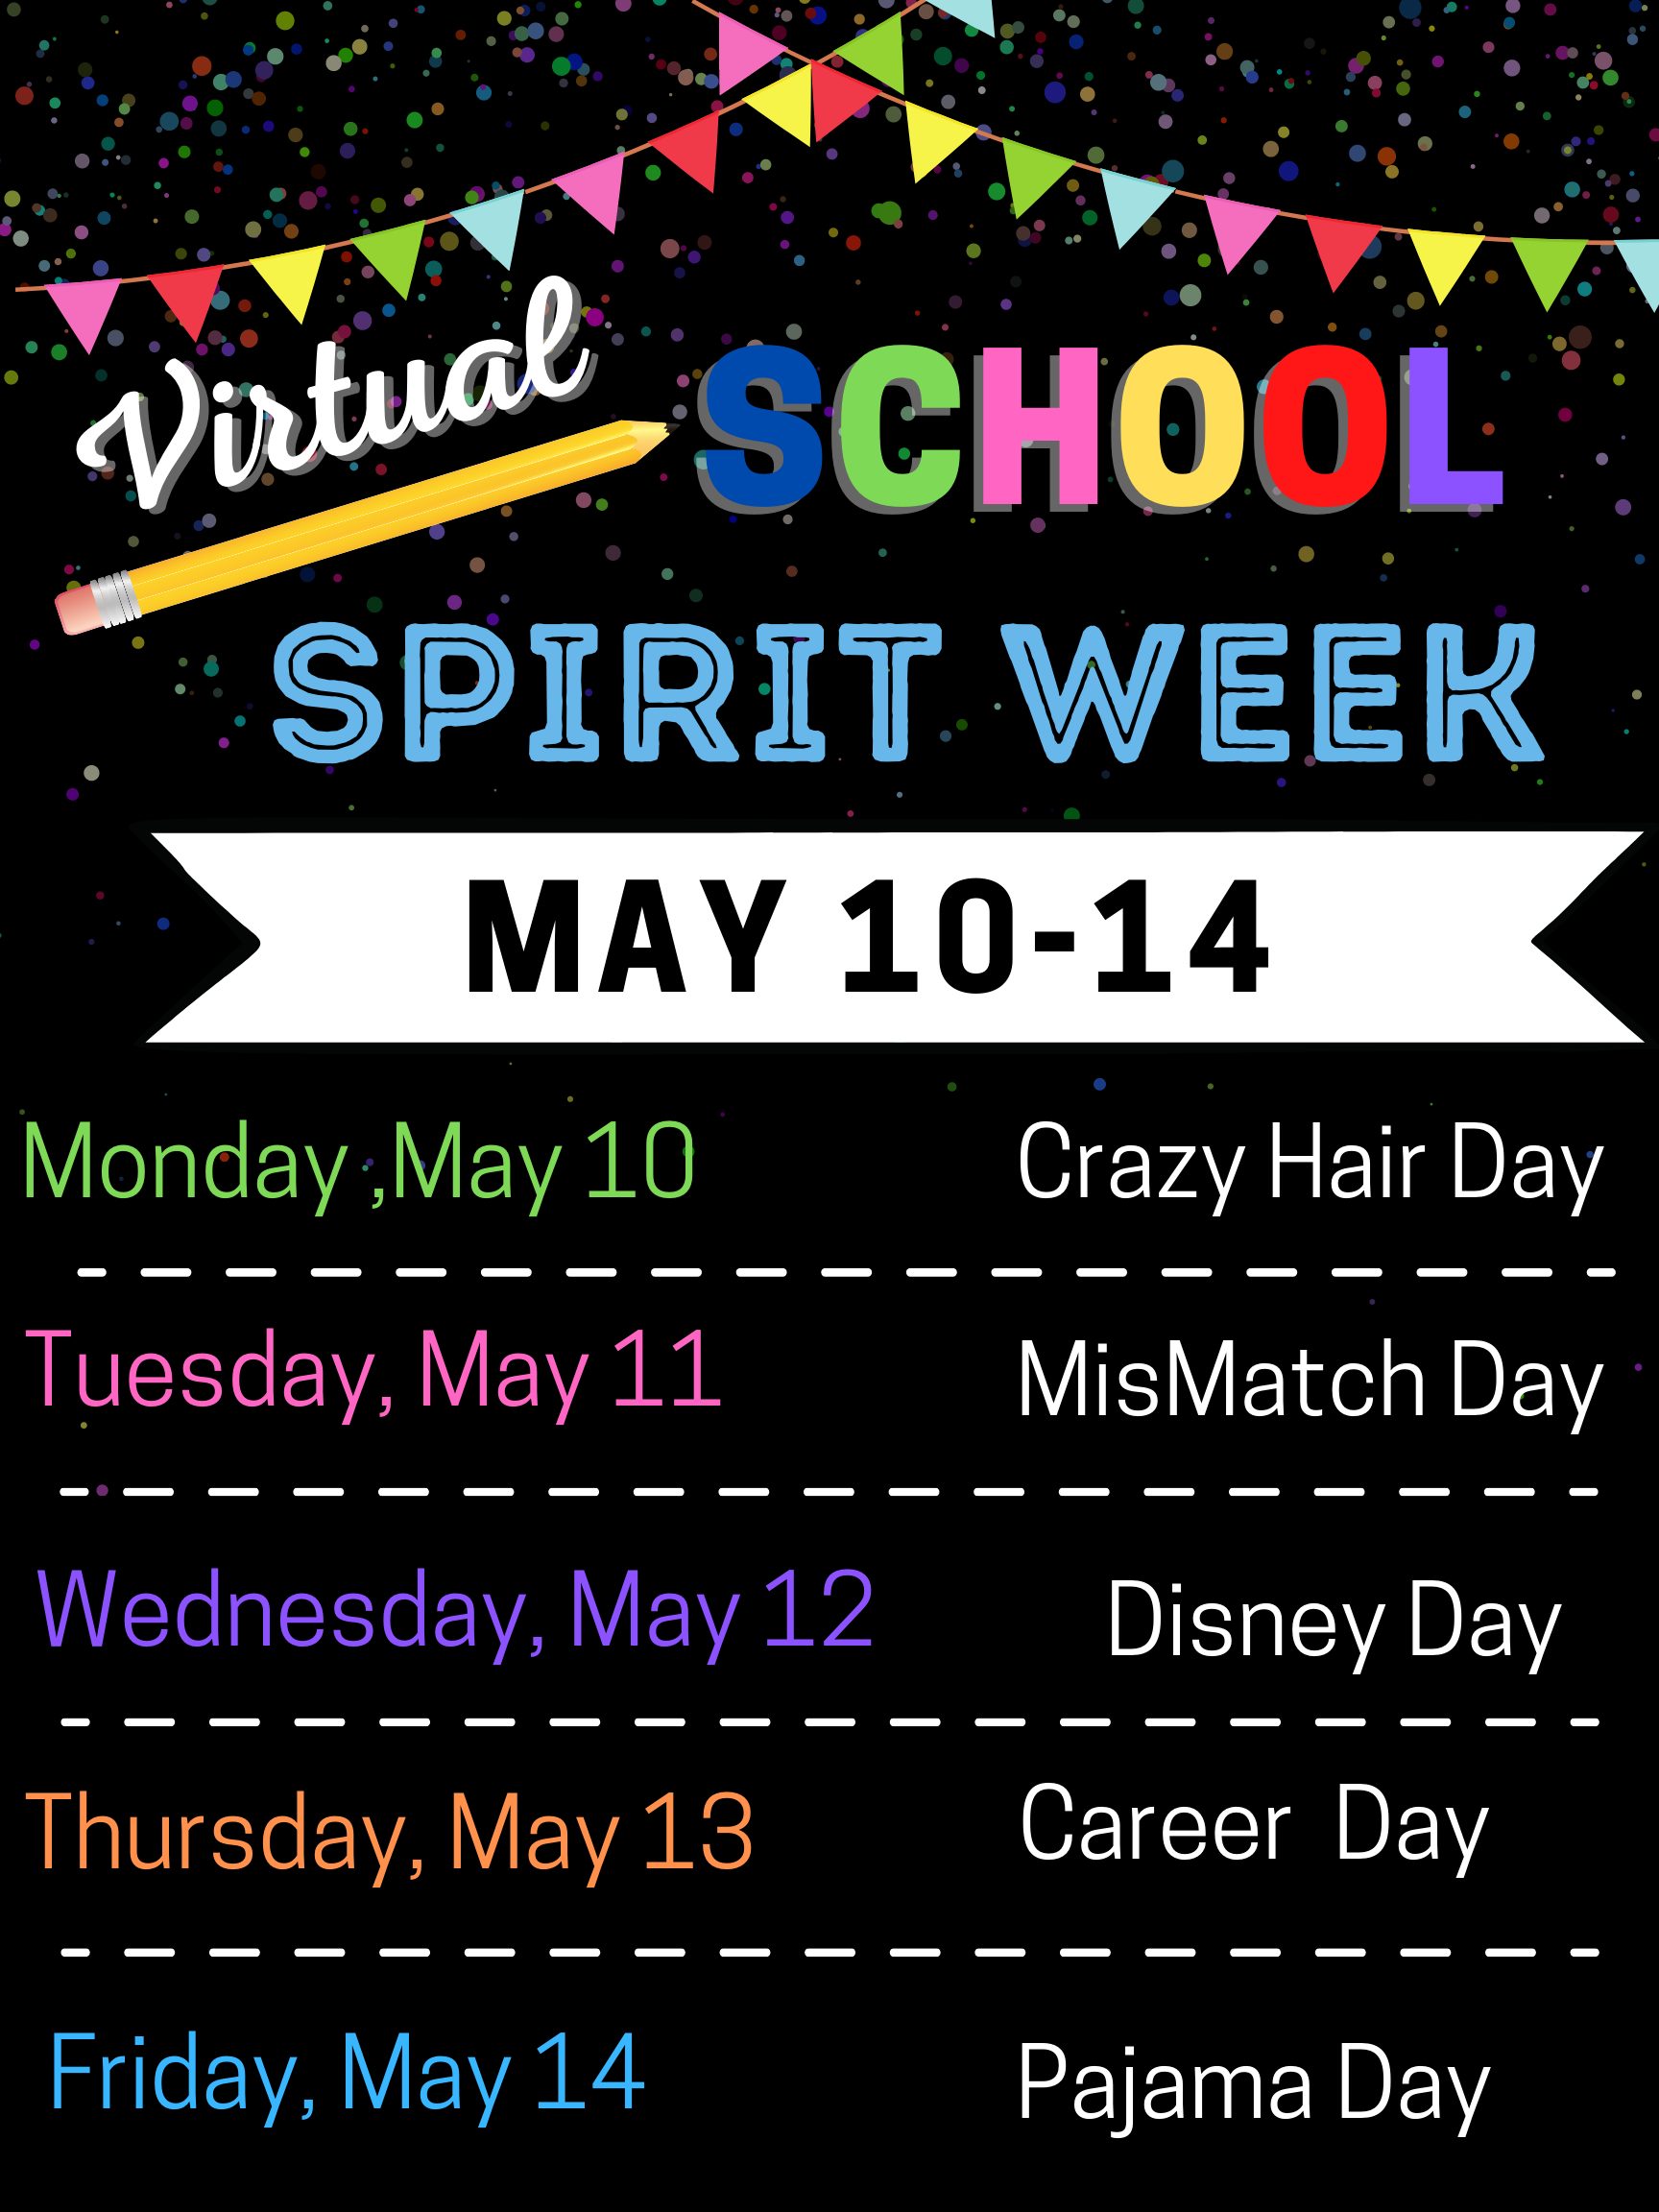 iLEAD Online School Spirit Week: Monday Crazy Hair Day, Tuesday Mismatch Day, Wednesday Disney Day, Thursday Career Day, Friday PJs Day